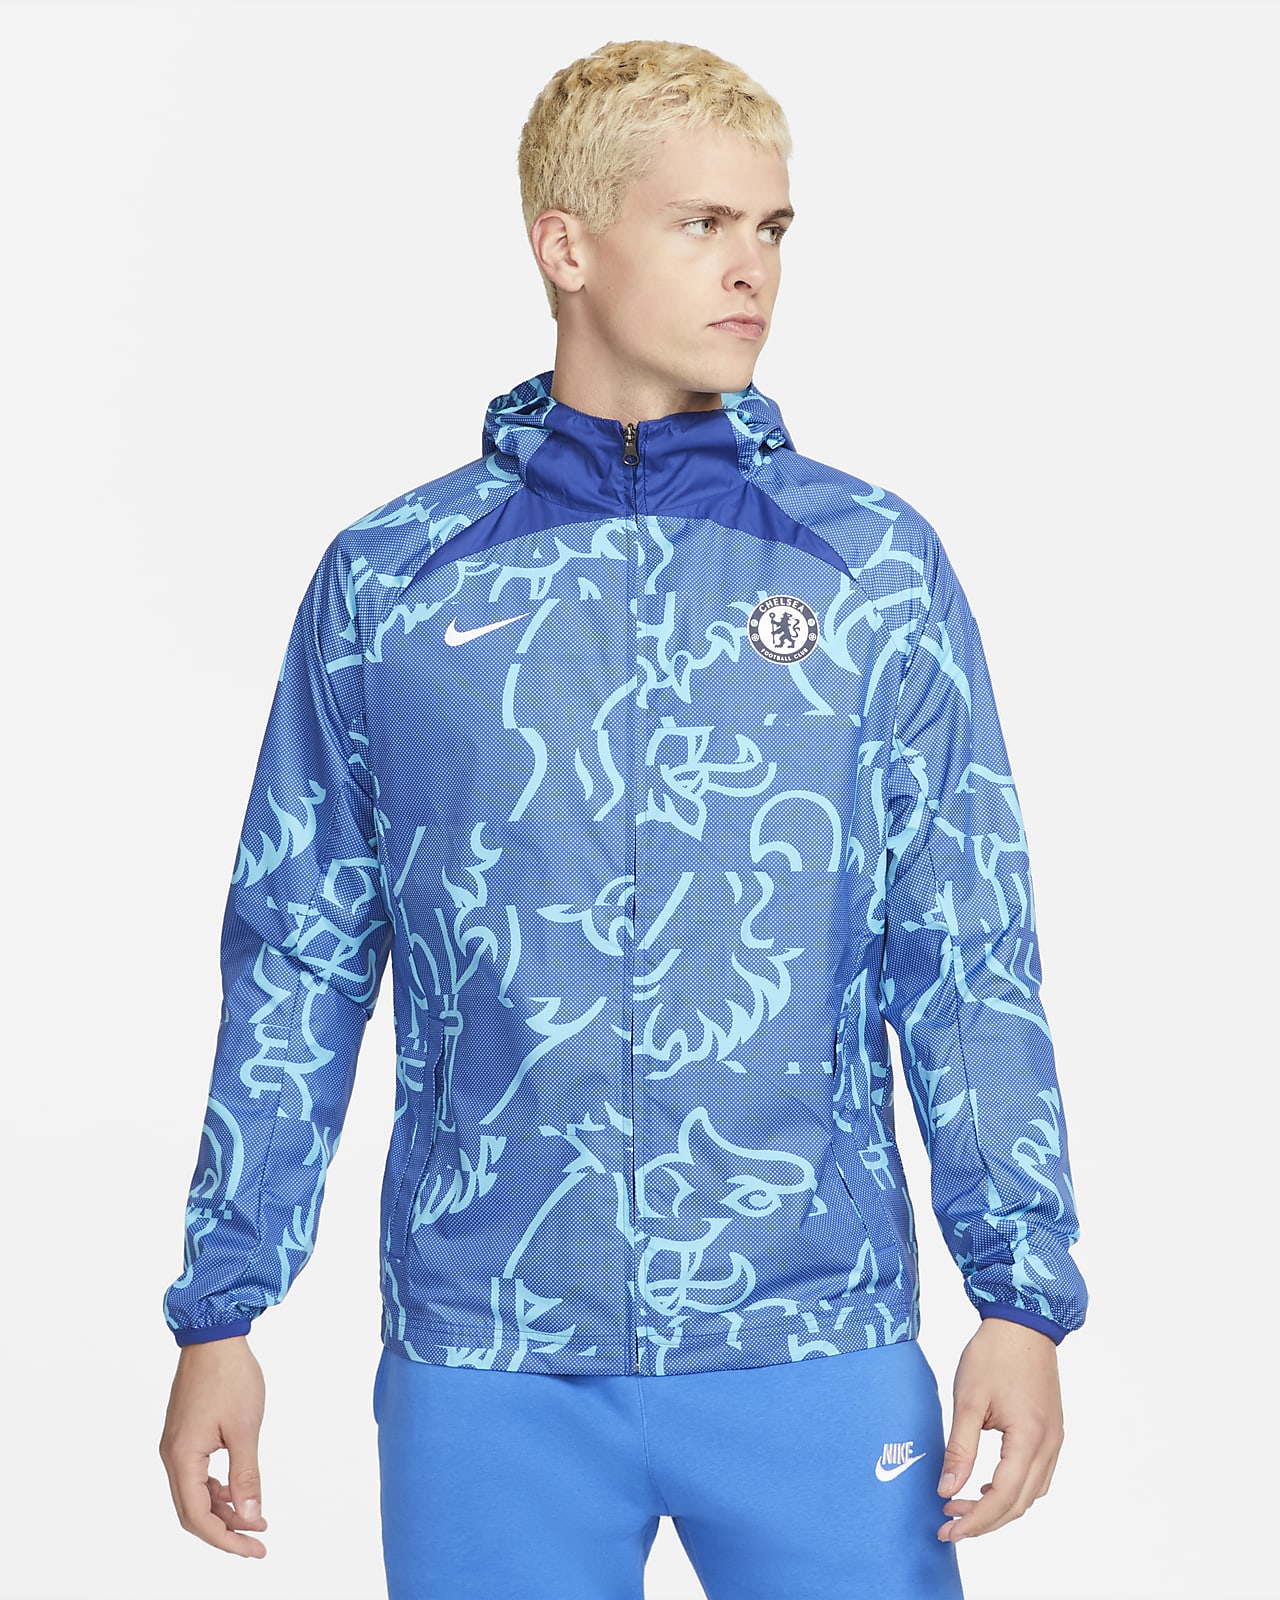 Chelsea FC AWF Men's Soccer Jacket